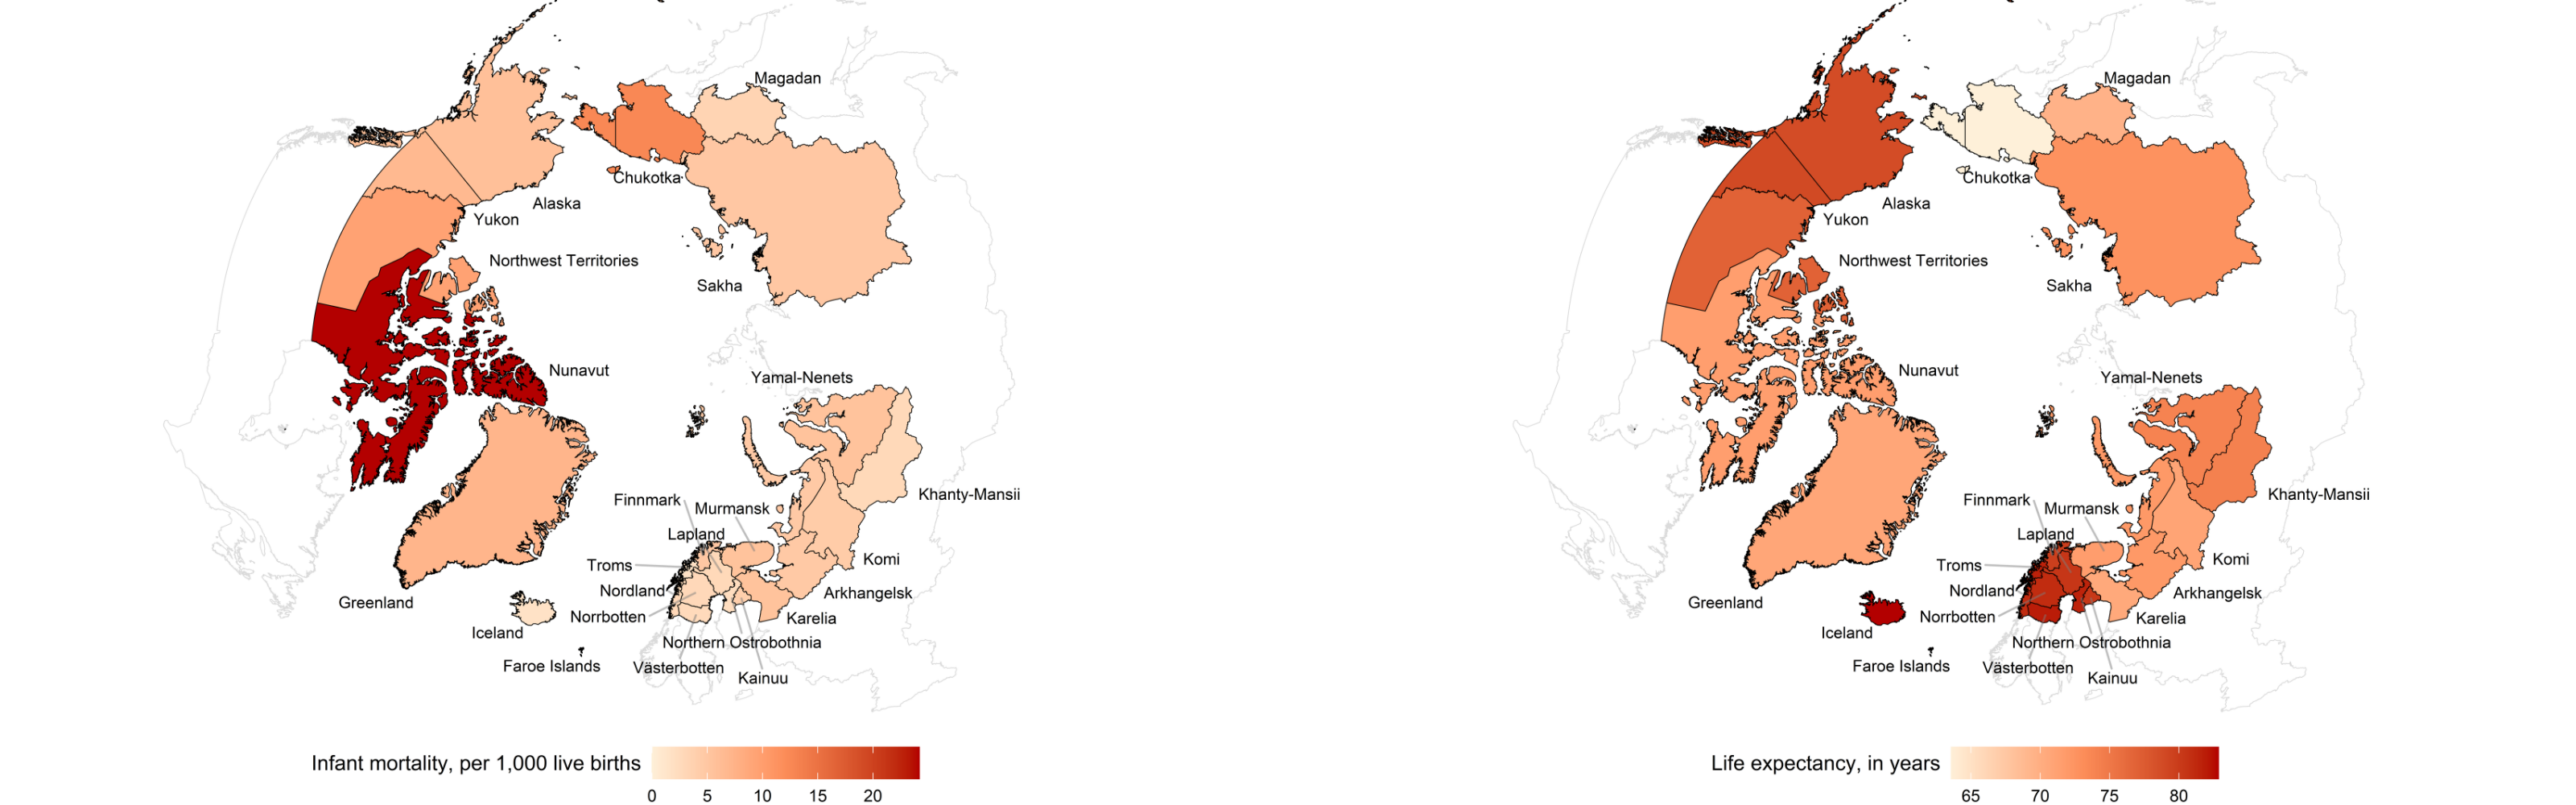 arctique-activites-scientifiques-et-inegalites-sociales-map